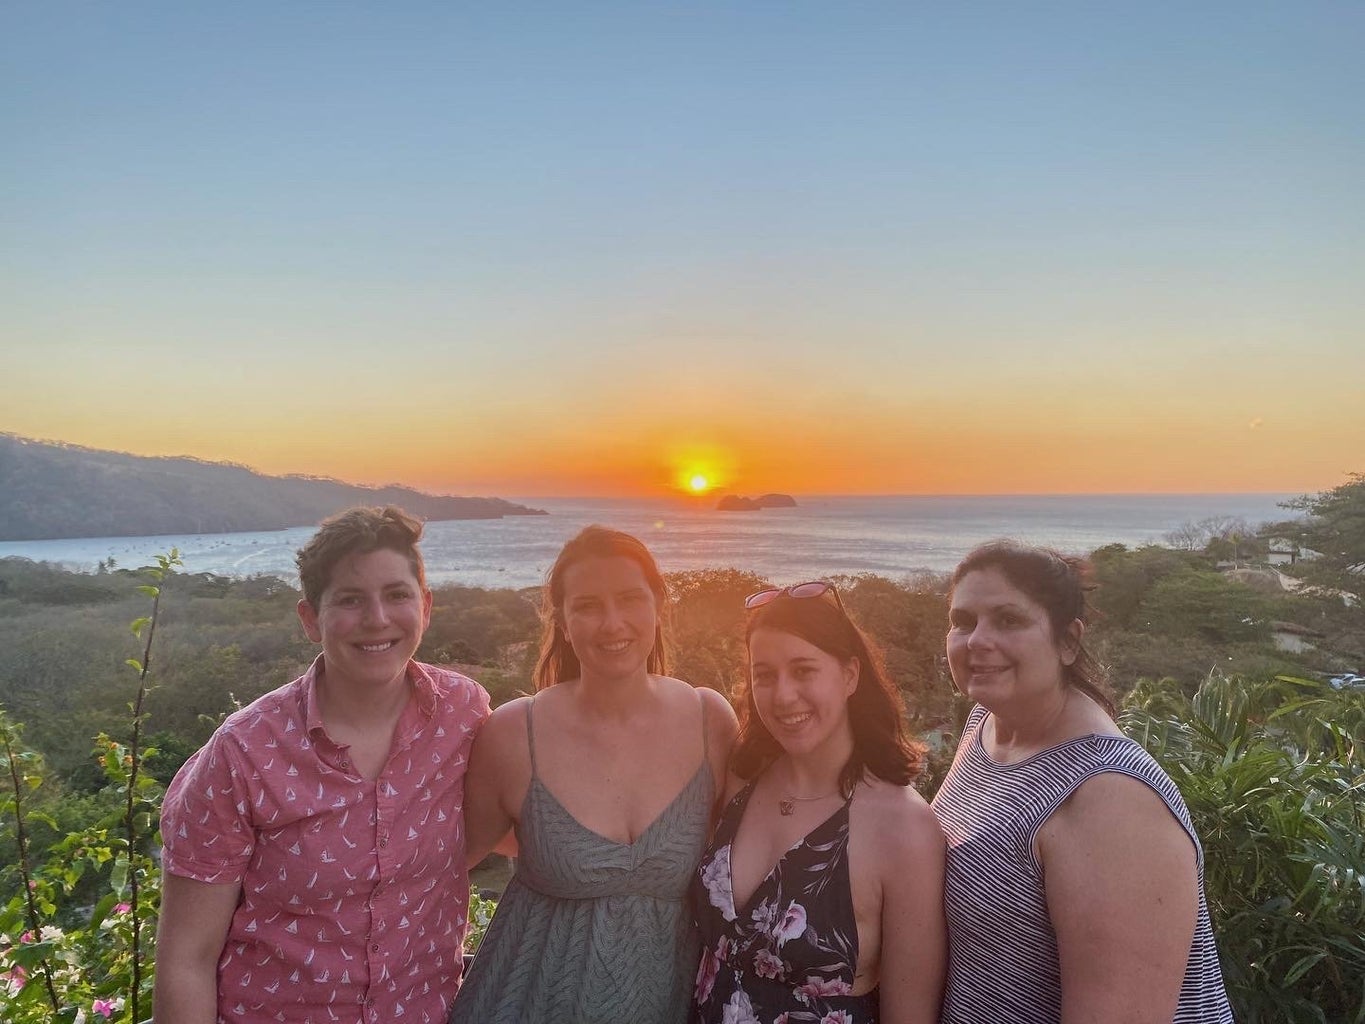 4 women in a sunset